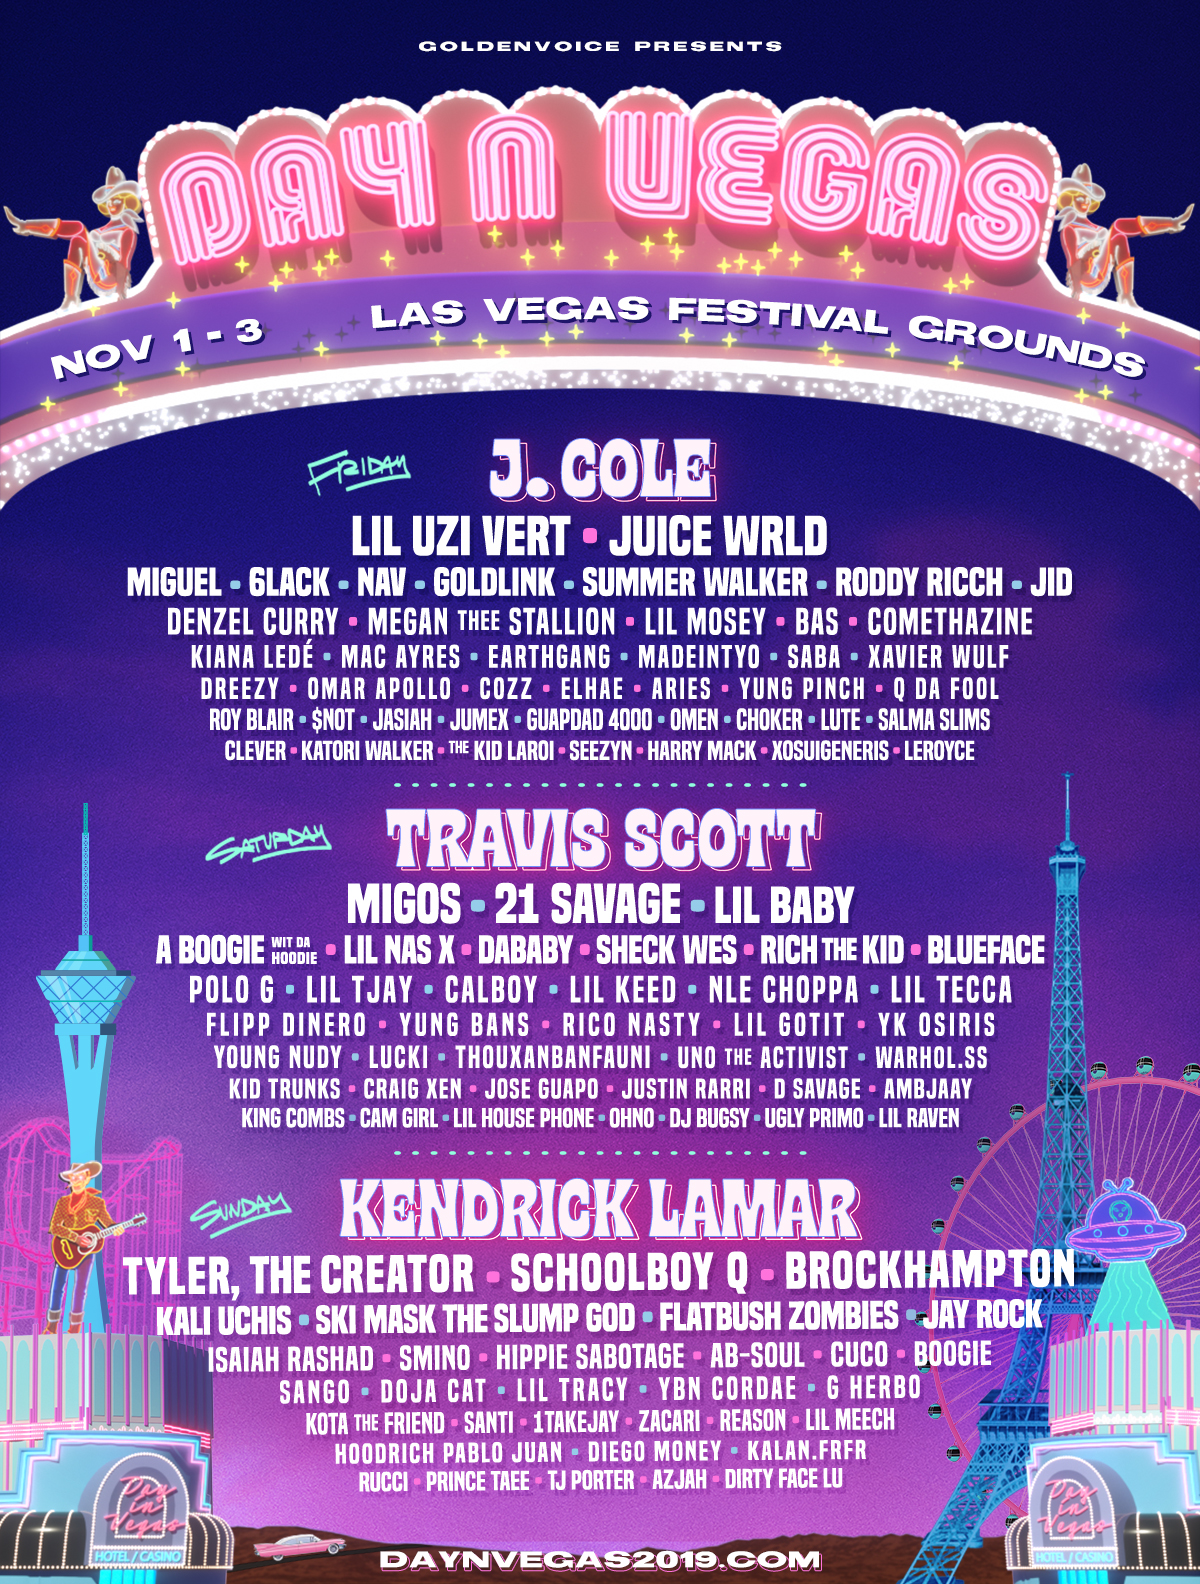 Day N Vegas 2019 Lineup: J. Cole, Kendrick Lamar, And Travis Scott